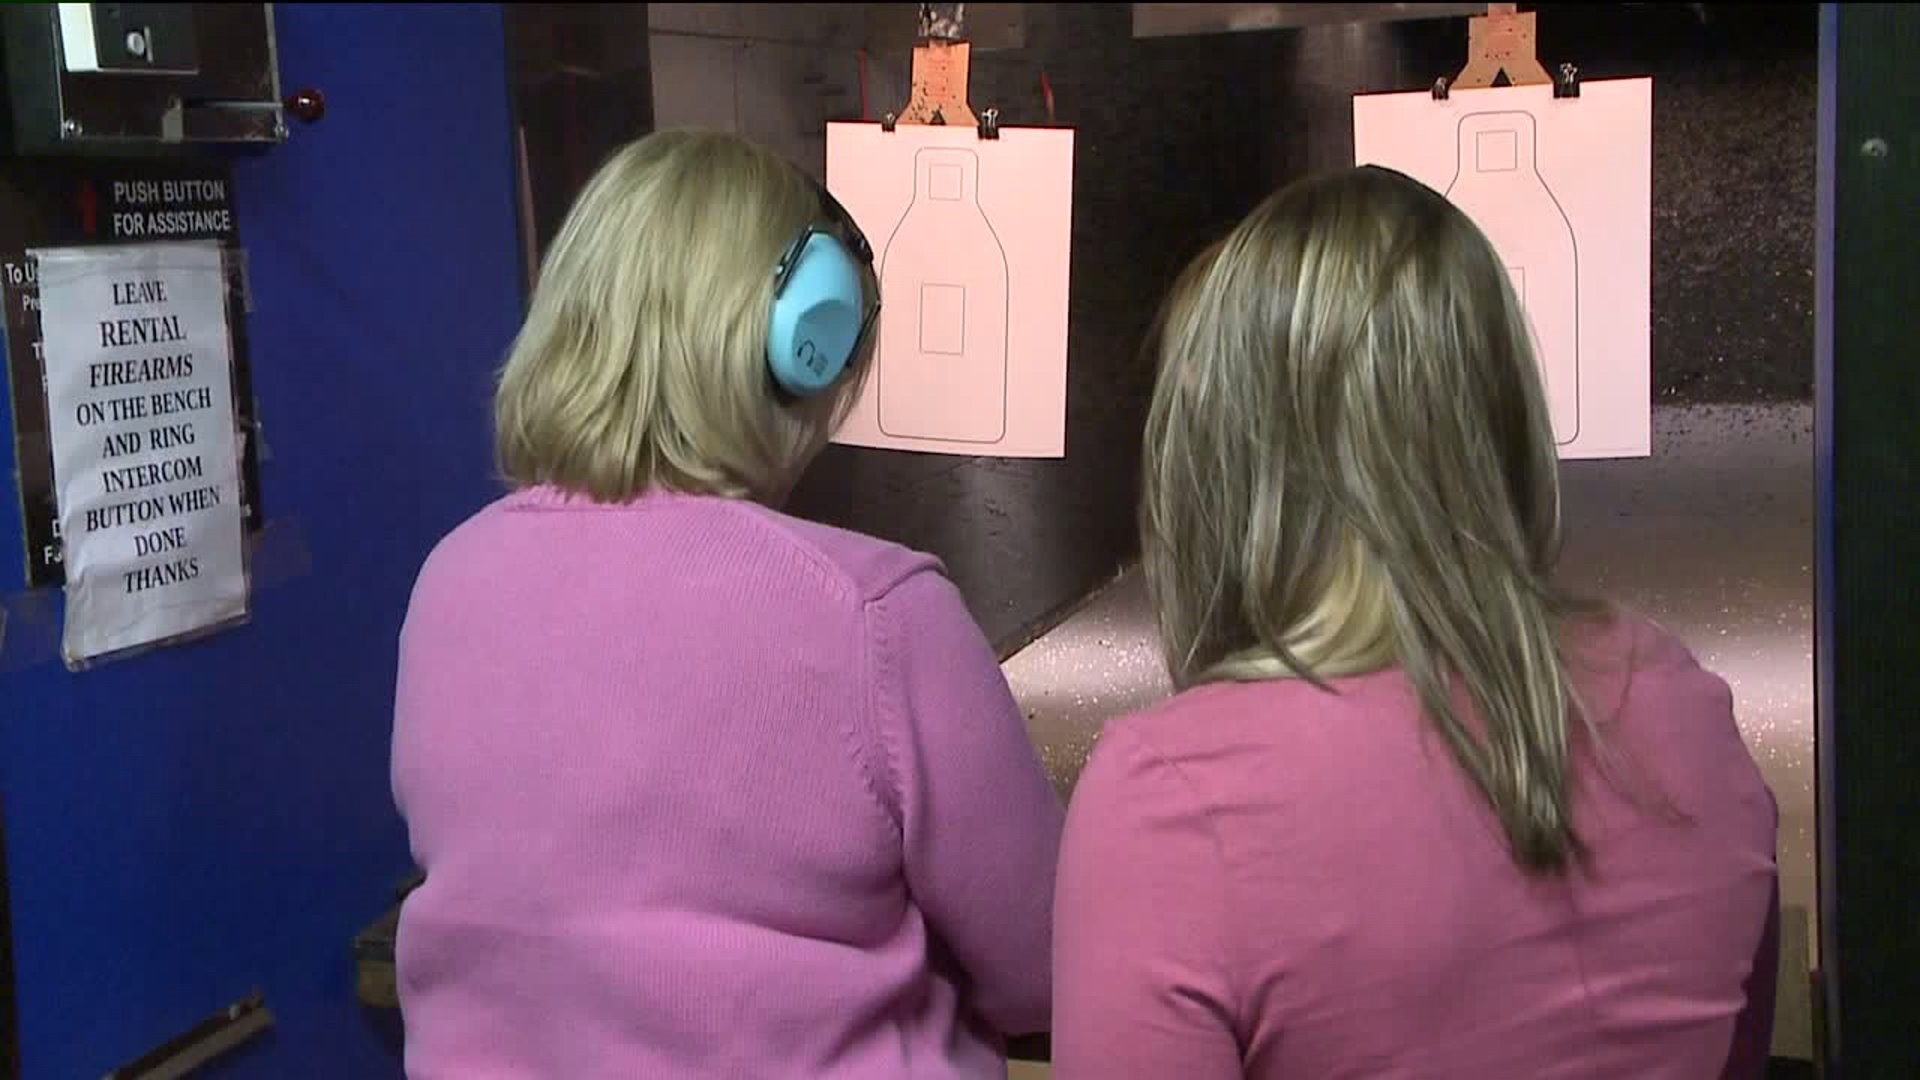 Ladies Night Draws Crowd To Shooting Range In Poconos